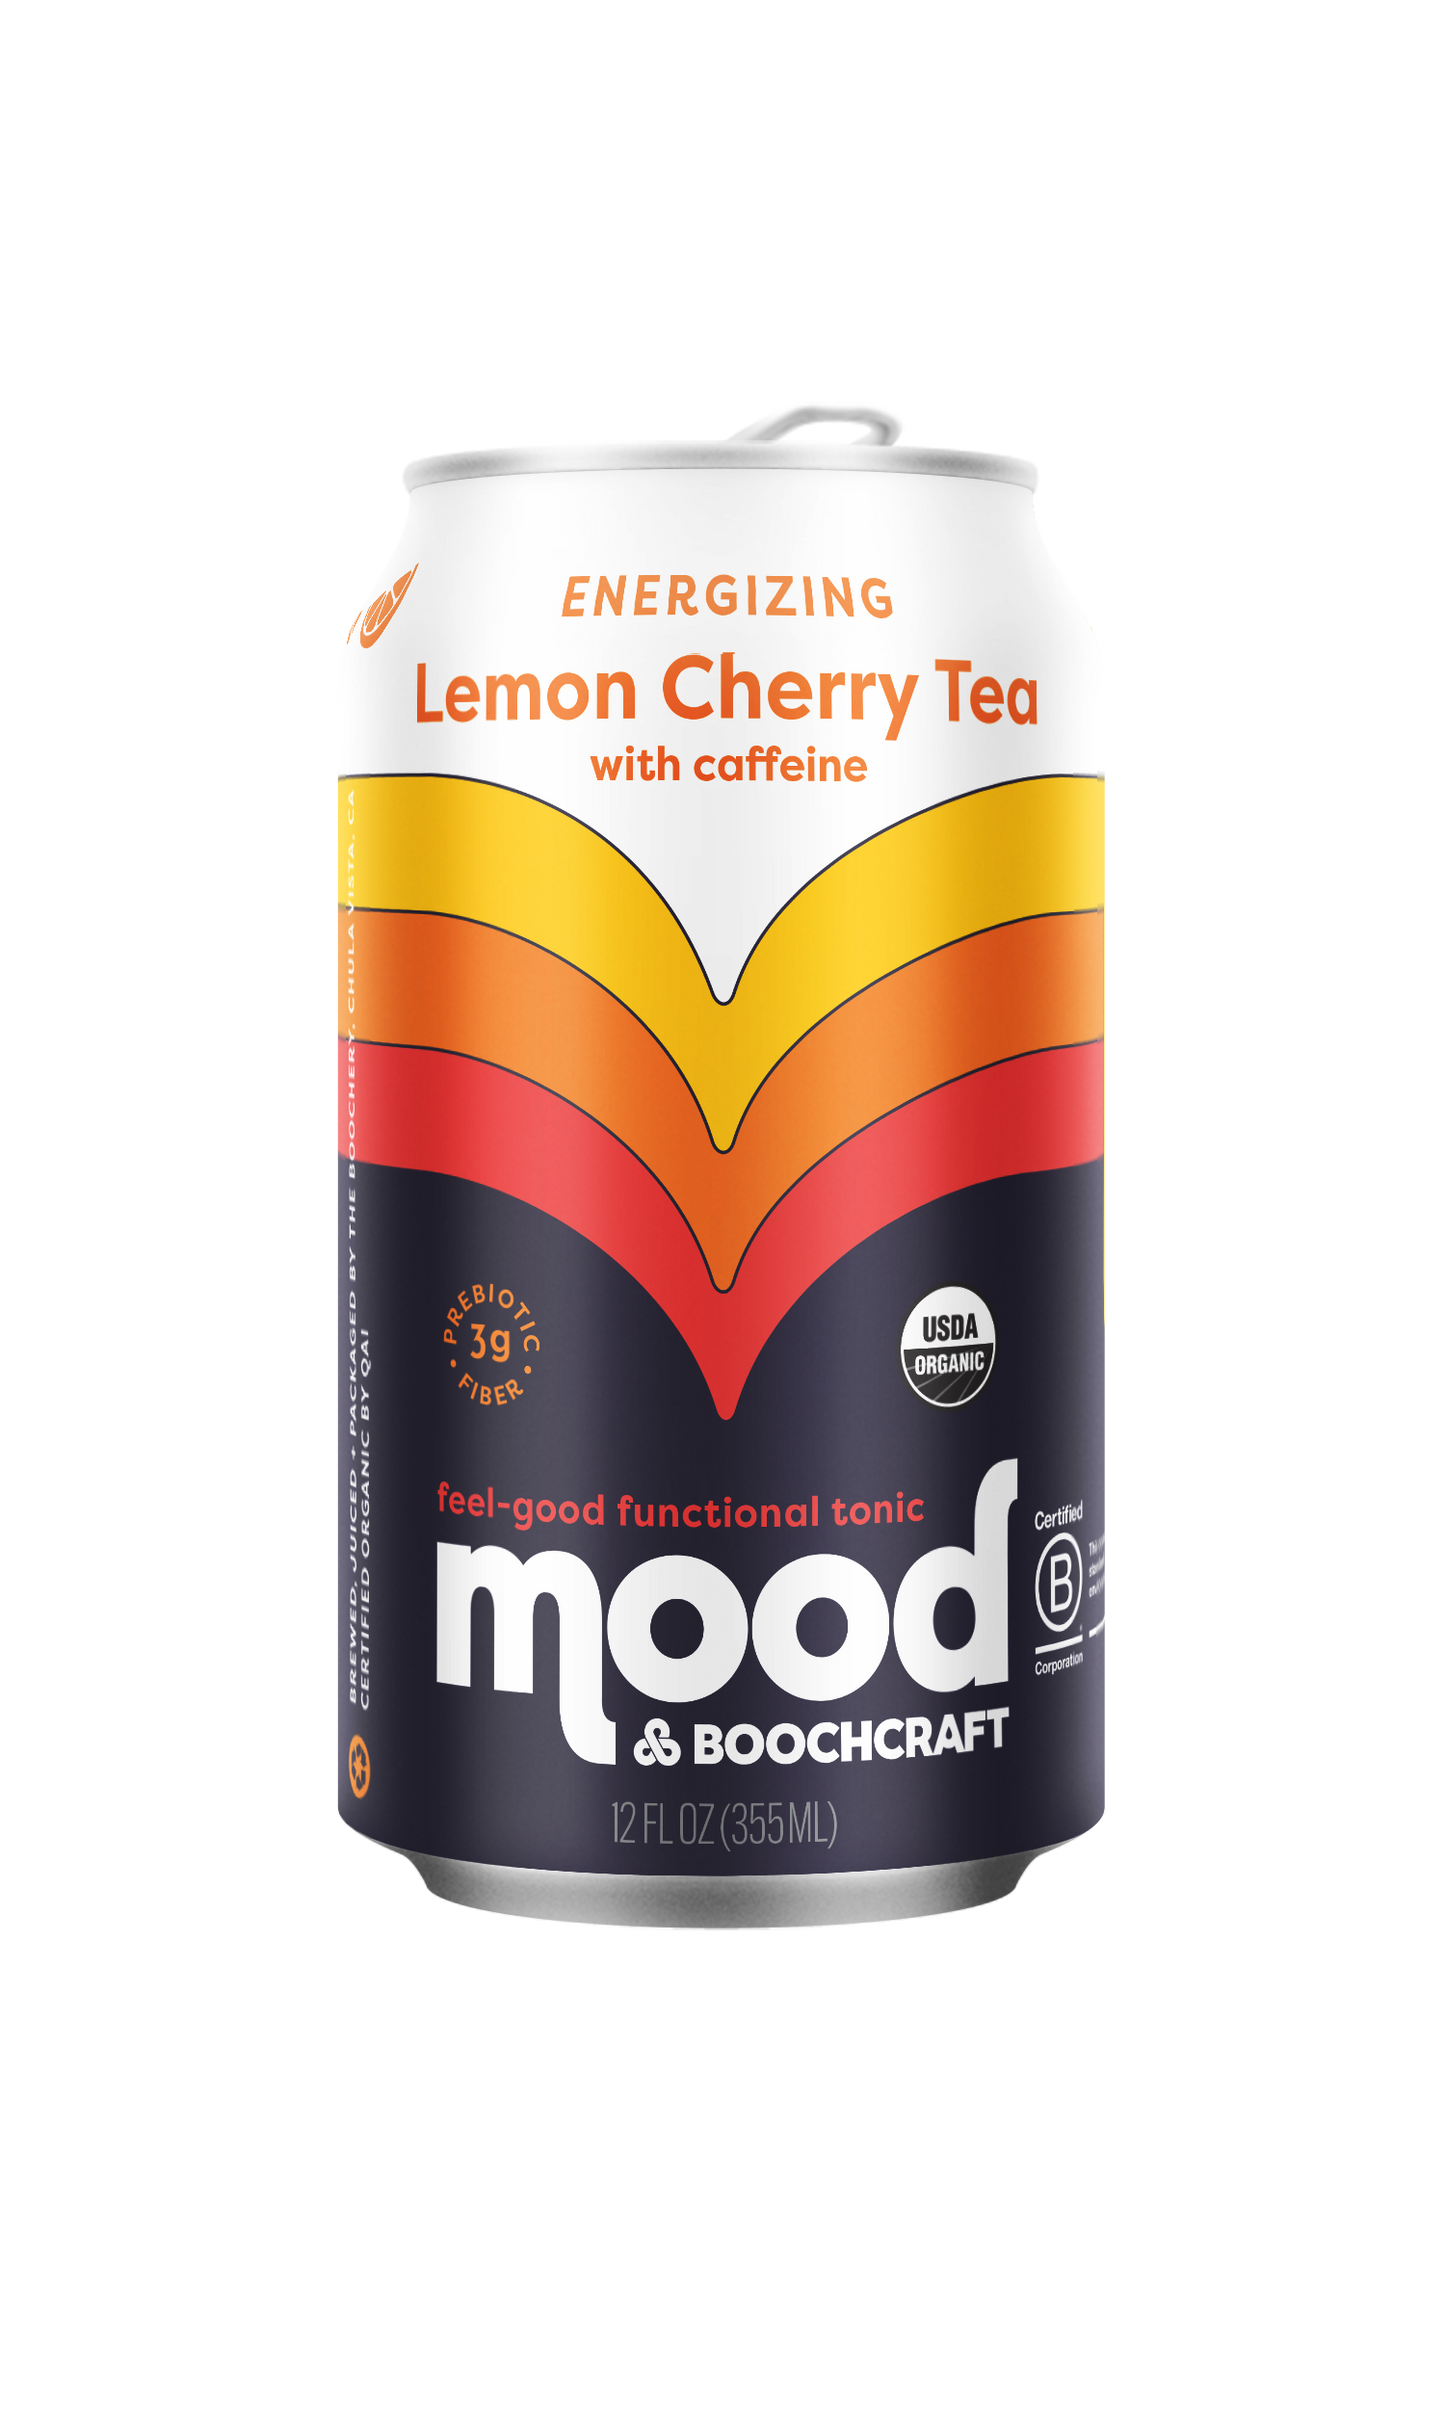 Energizing Lemon Cherry Tea